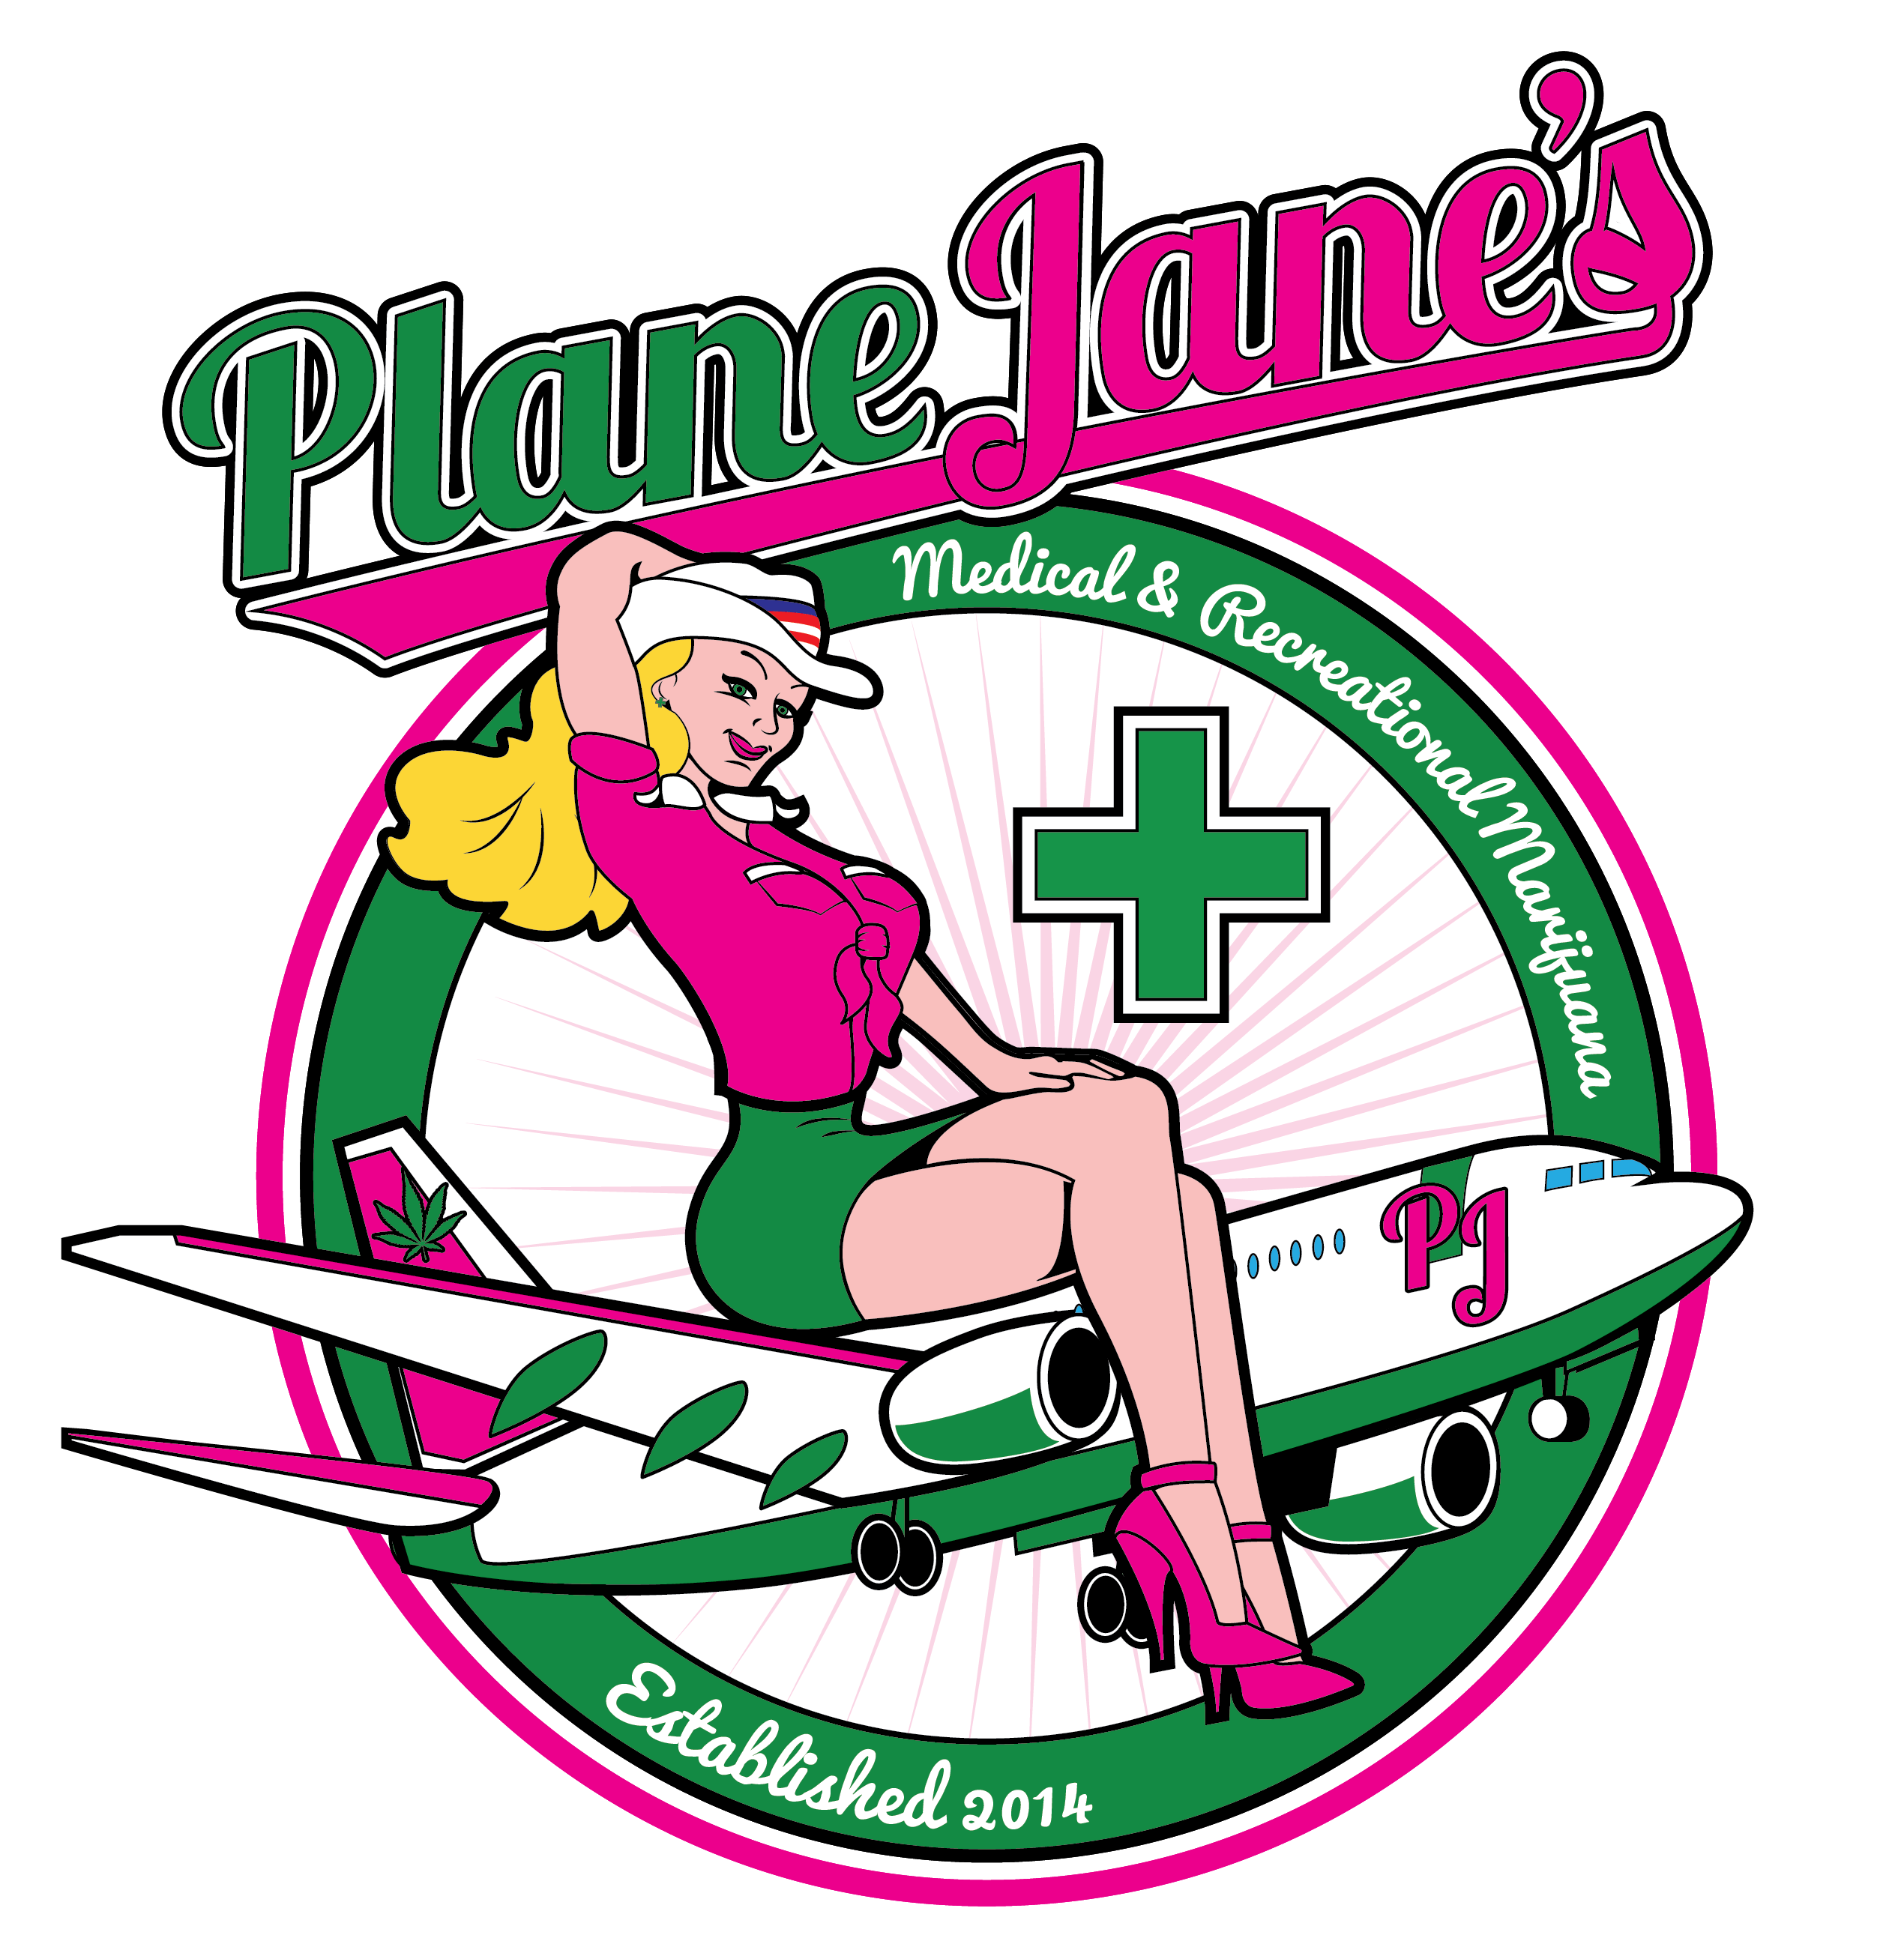 Plane Jane's - Medical Marijuana Doctors - Cannabizme.com